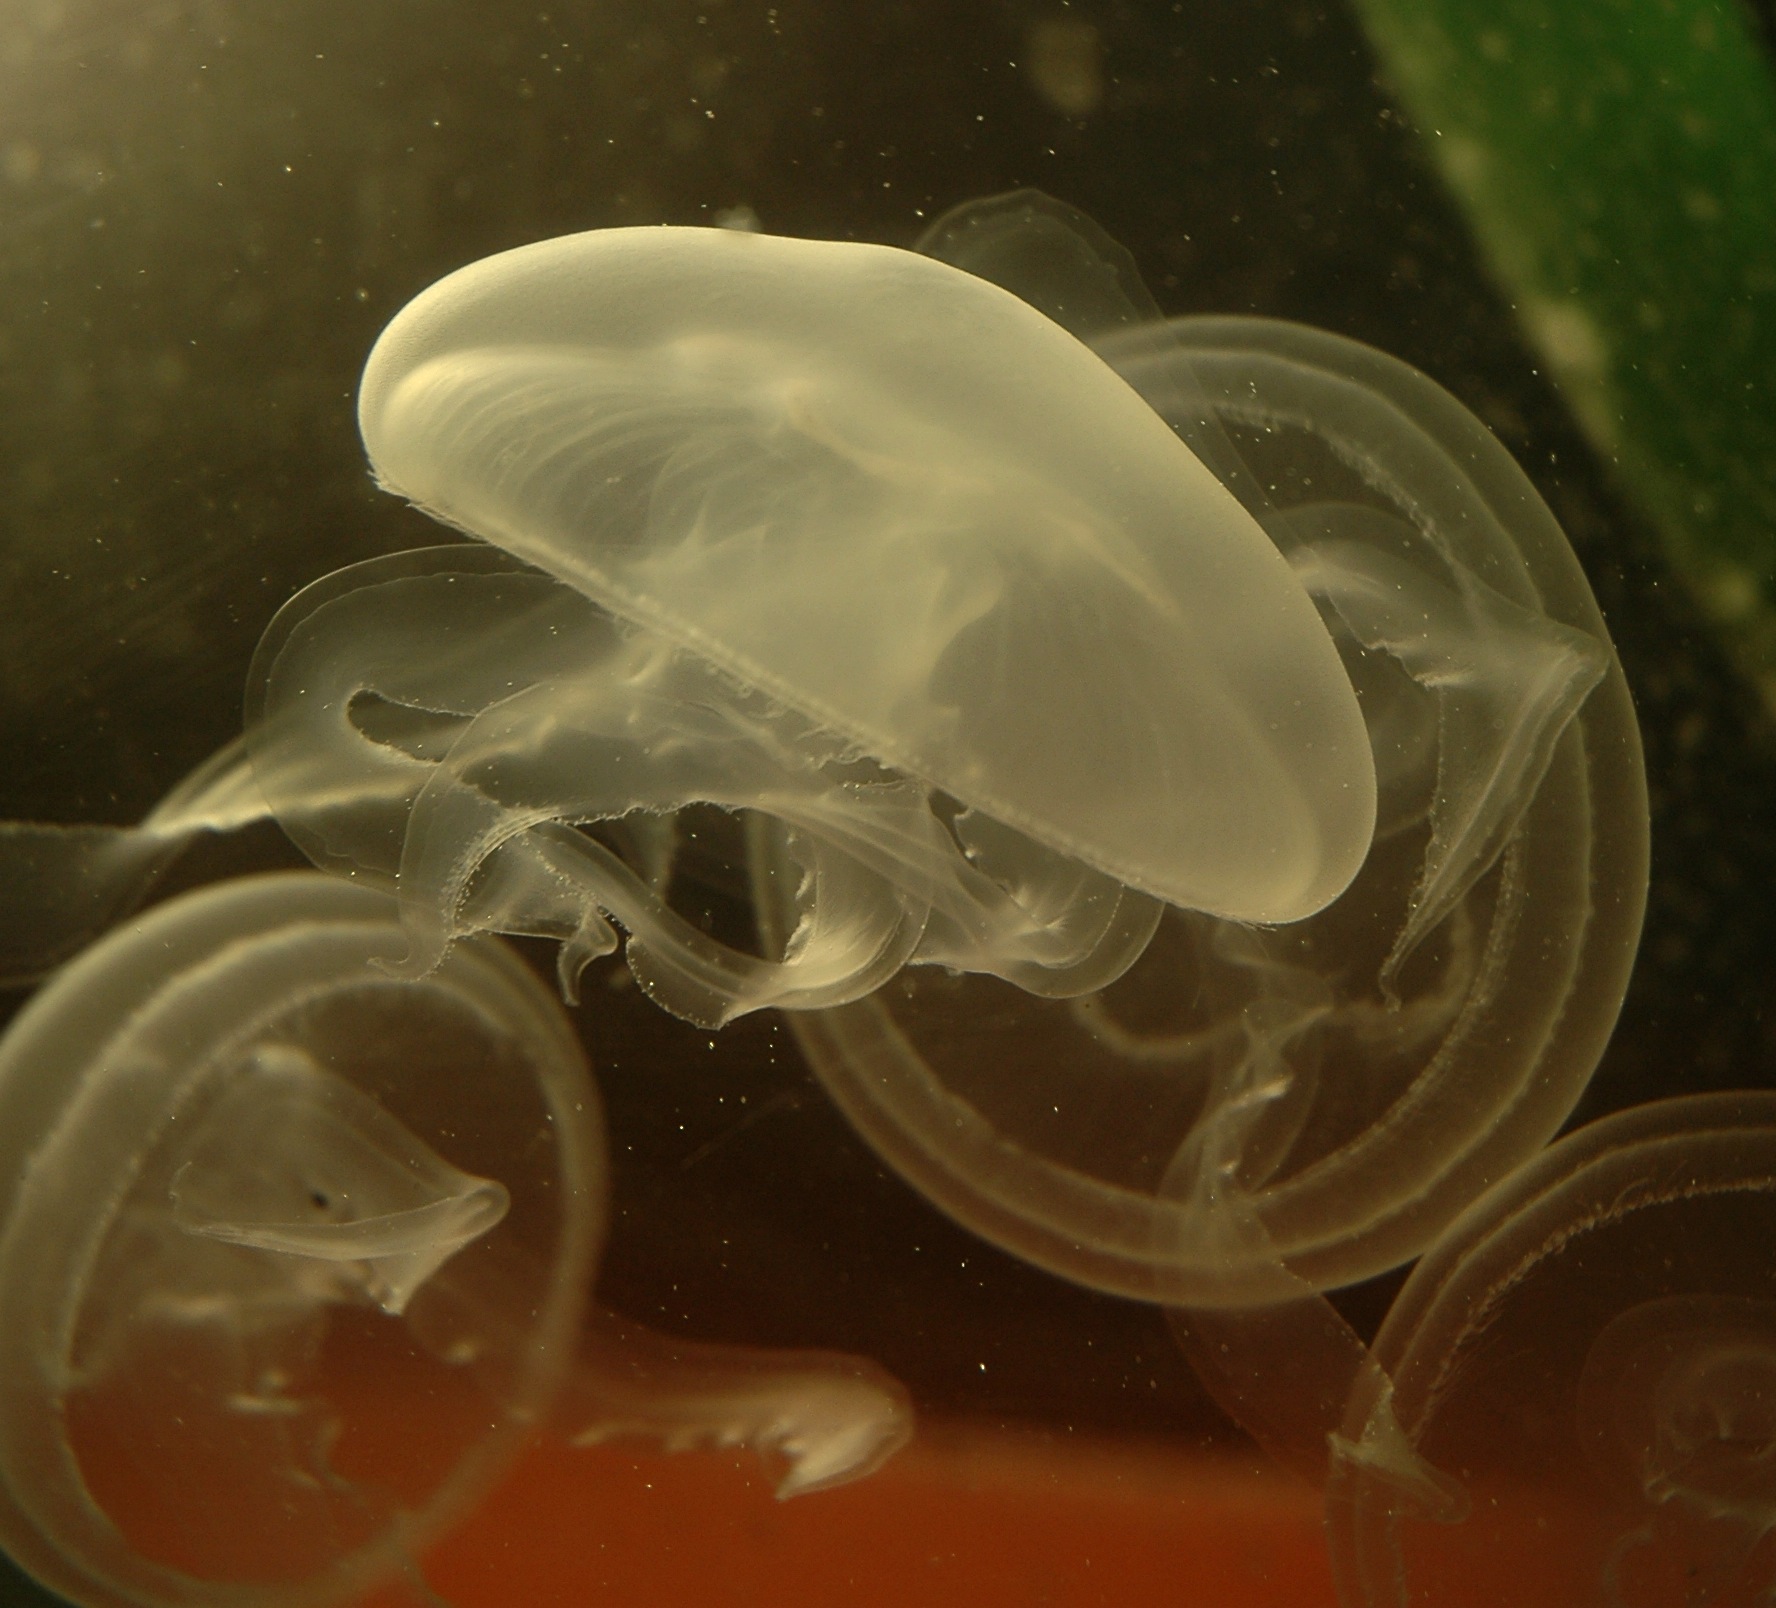 Adult moon jellyfish Aurelia aurita